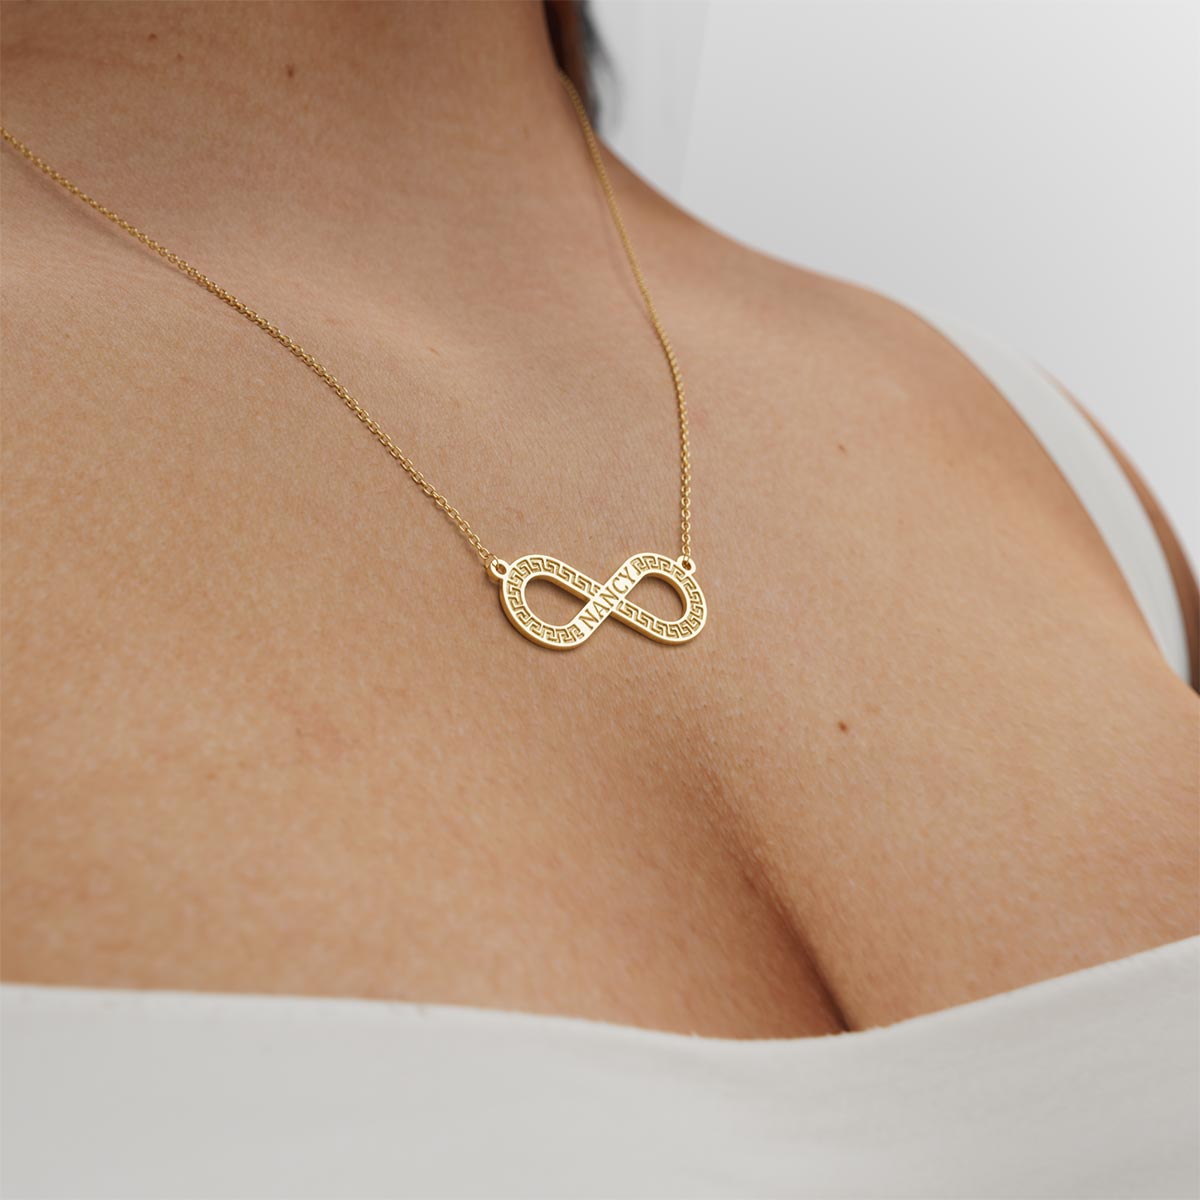 Personalized Greek Key Infinity Name Necklace